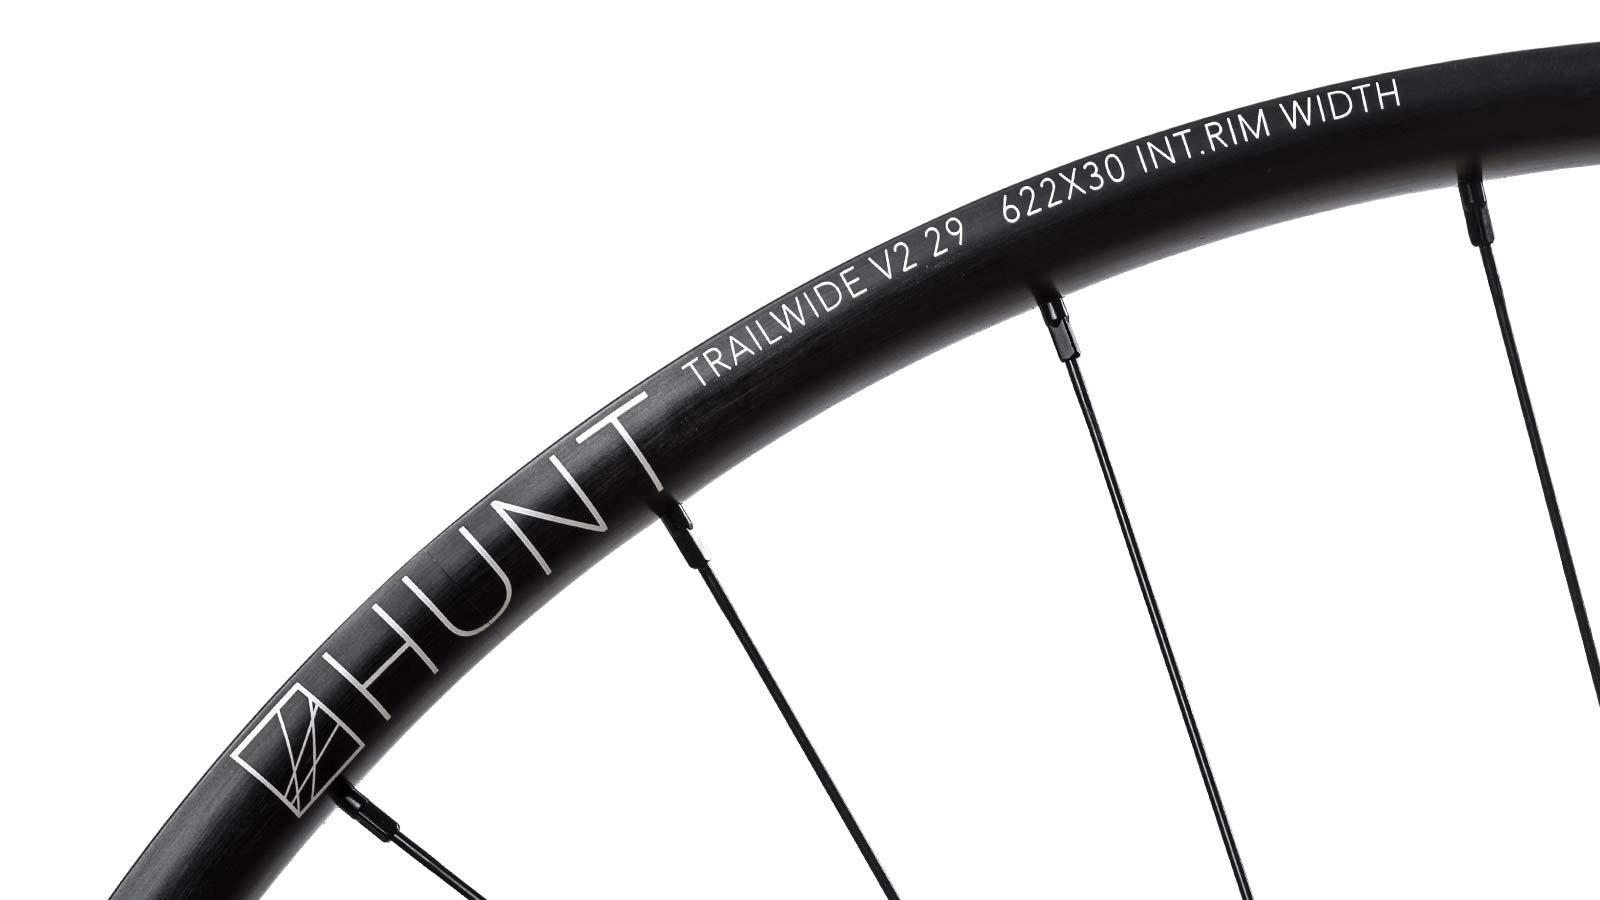 Hunt Trail Wide v2 versatile alloy mountain bike wheels, rim detail